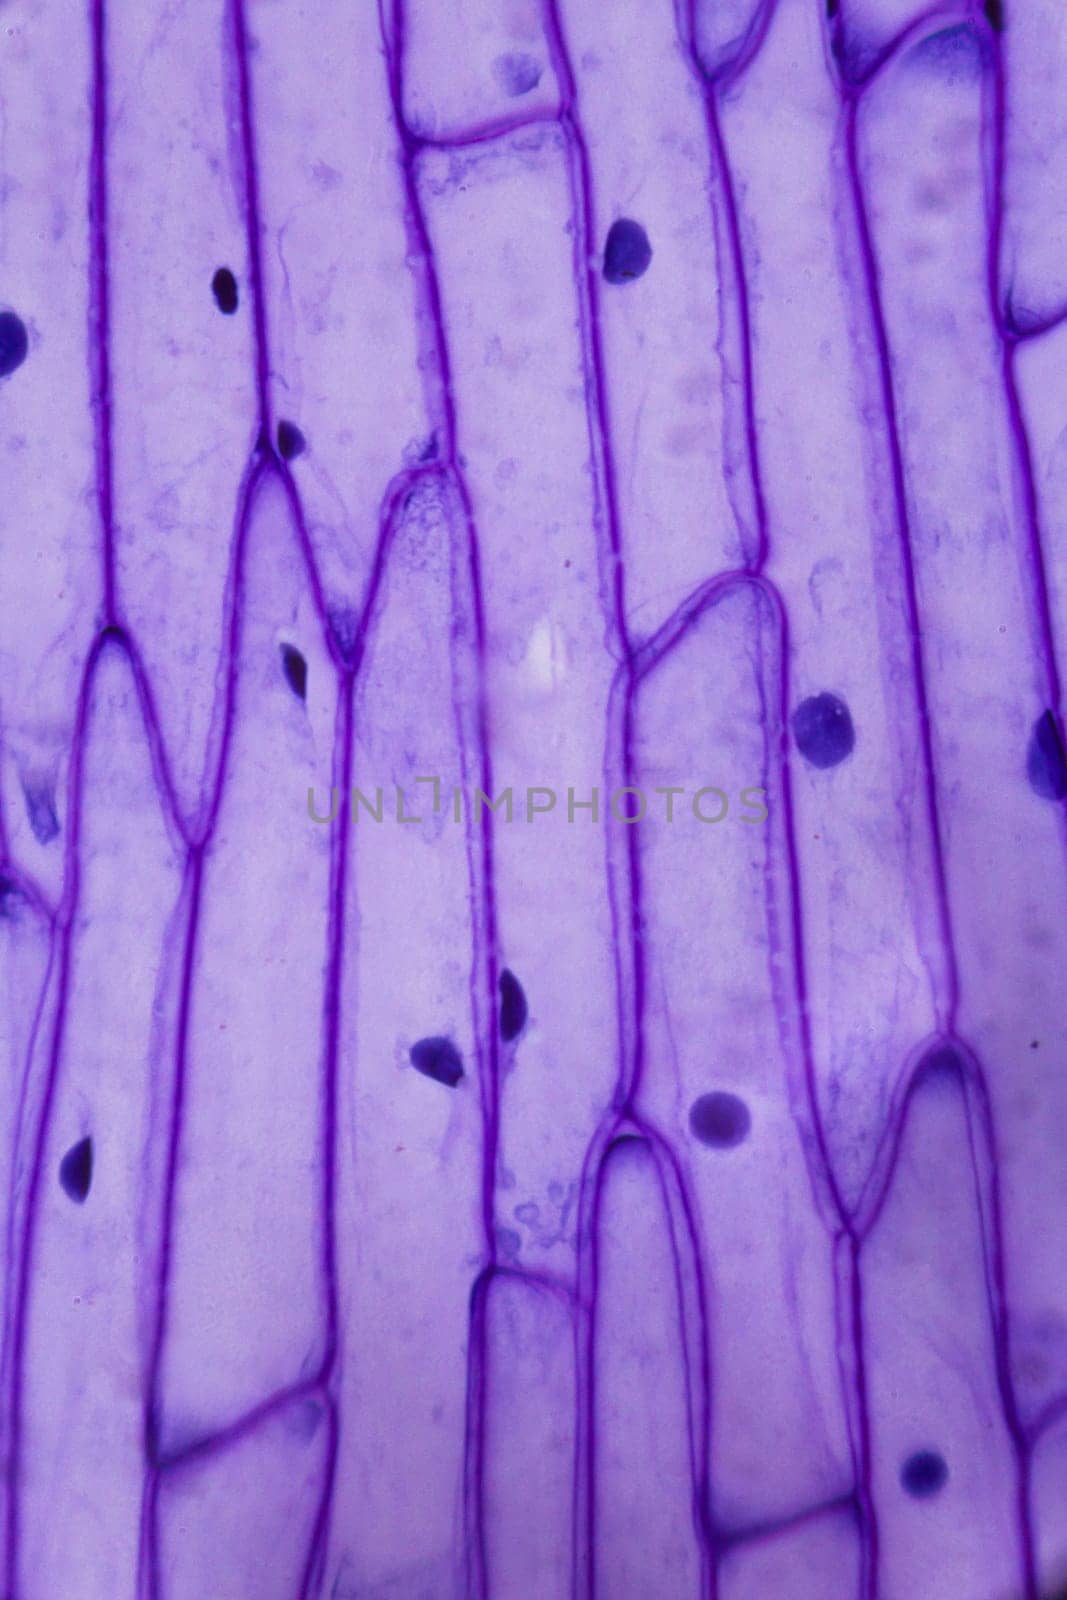 Purple onion peel under the microscope.